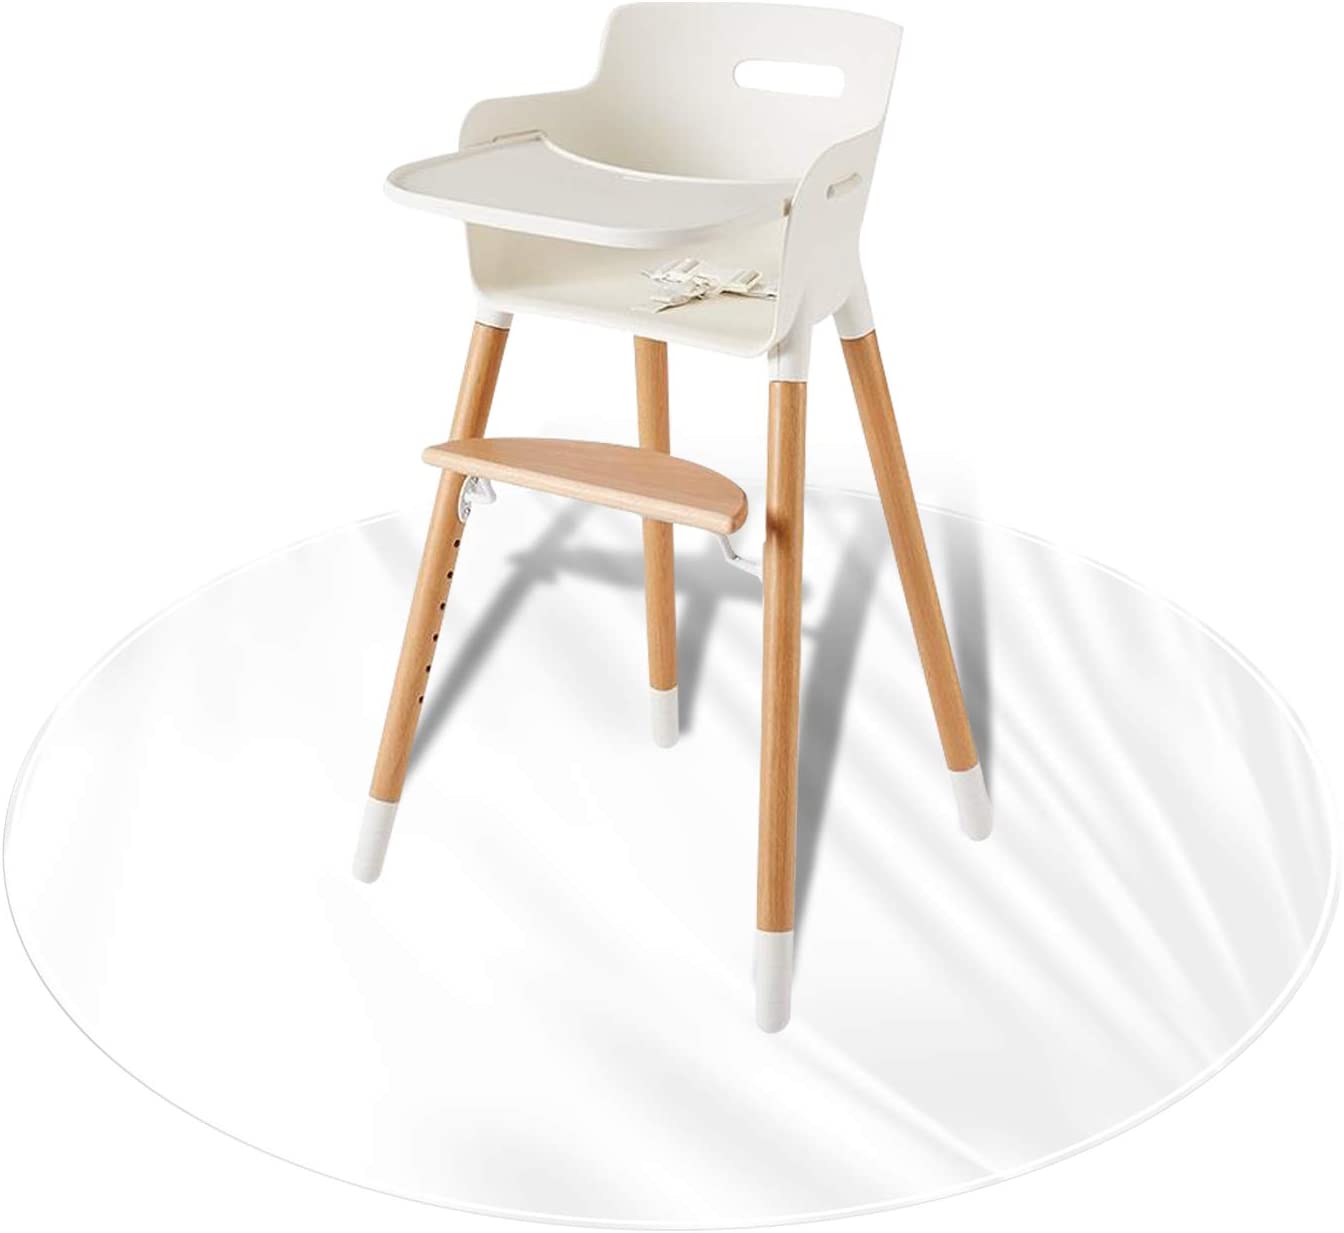 Splat Mat For Under High Chair (Plastic Round)